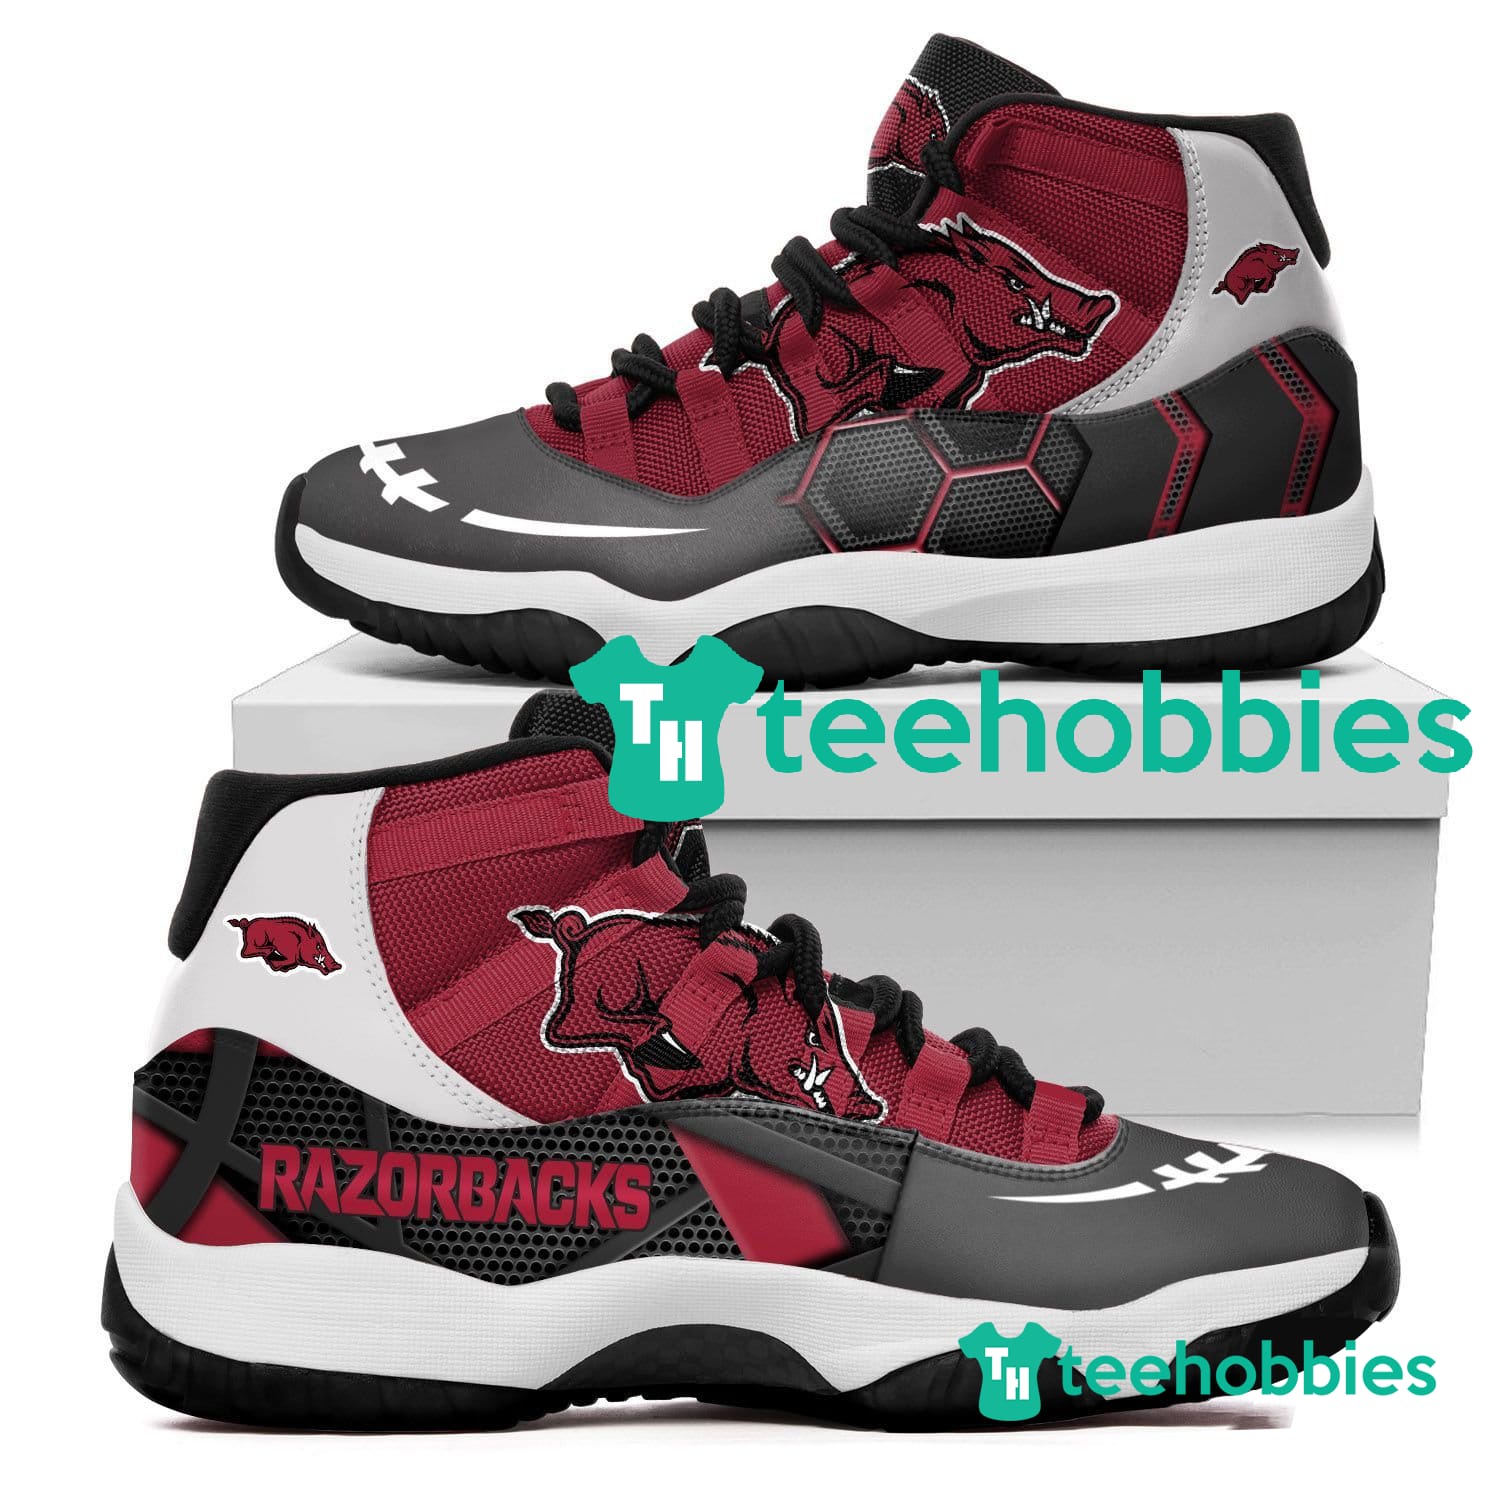 Arkansas Razorbacks New Air Jordan 11 Sneakers Shoes Concord Bred Retro Design Men Women Product photo 1